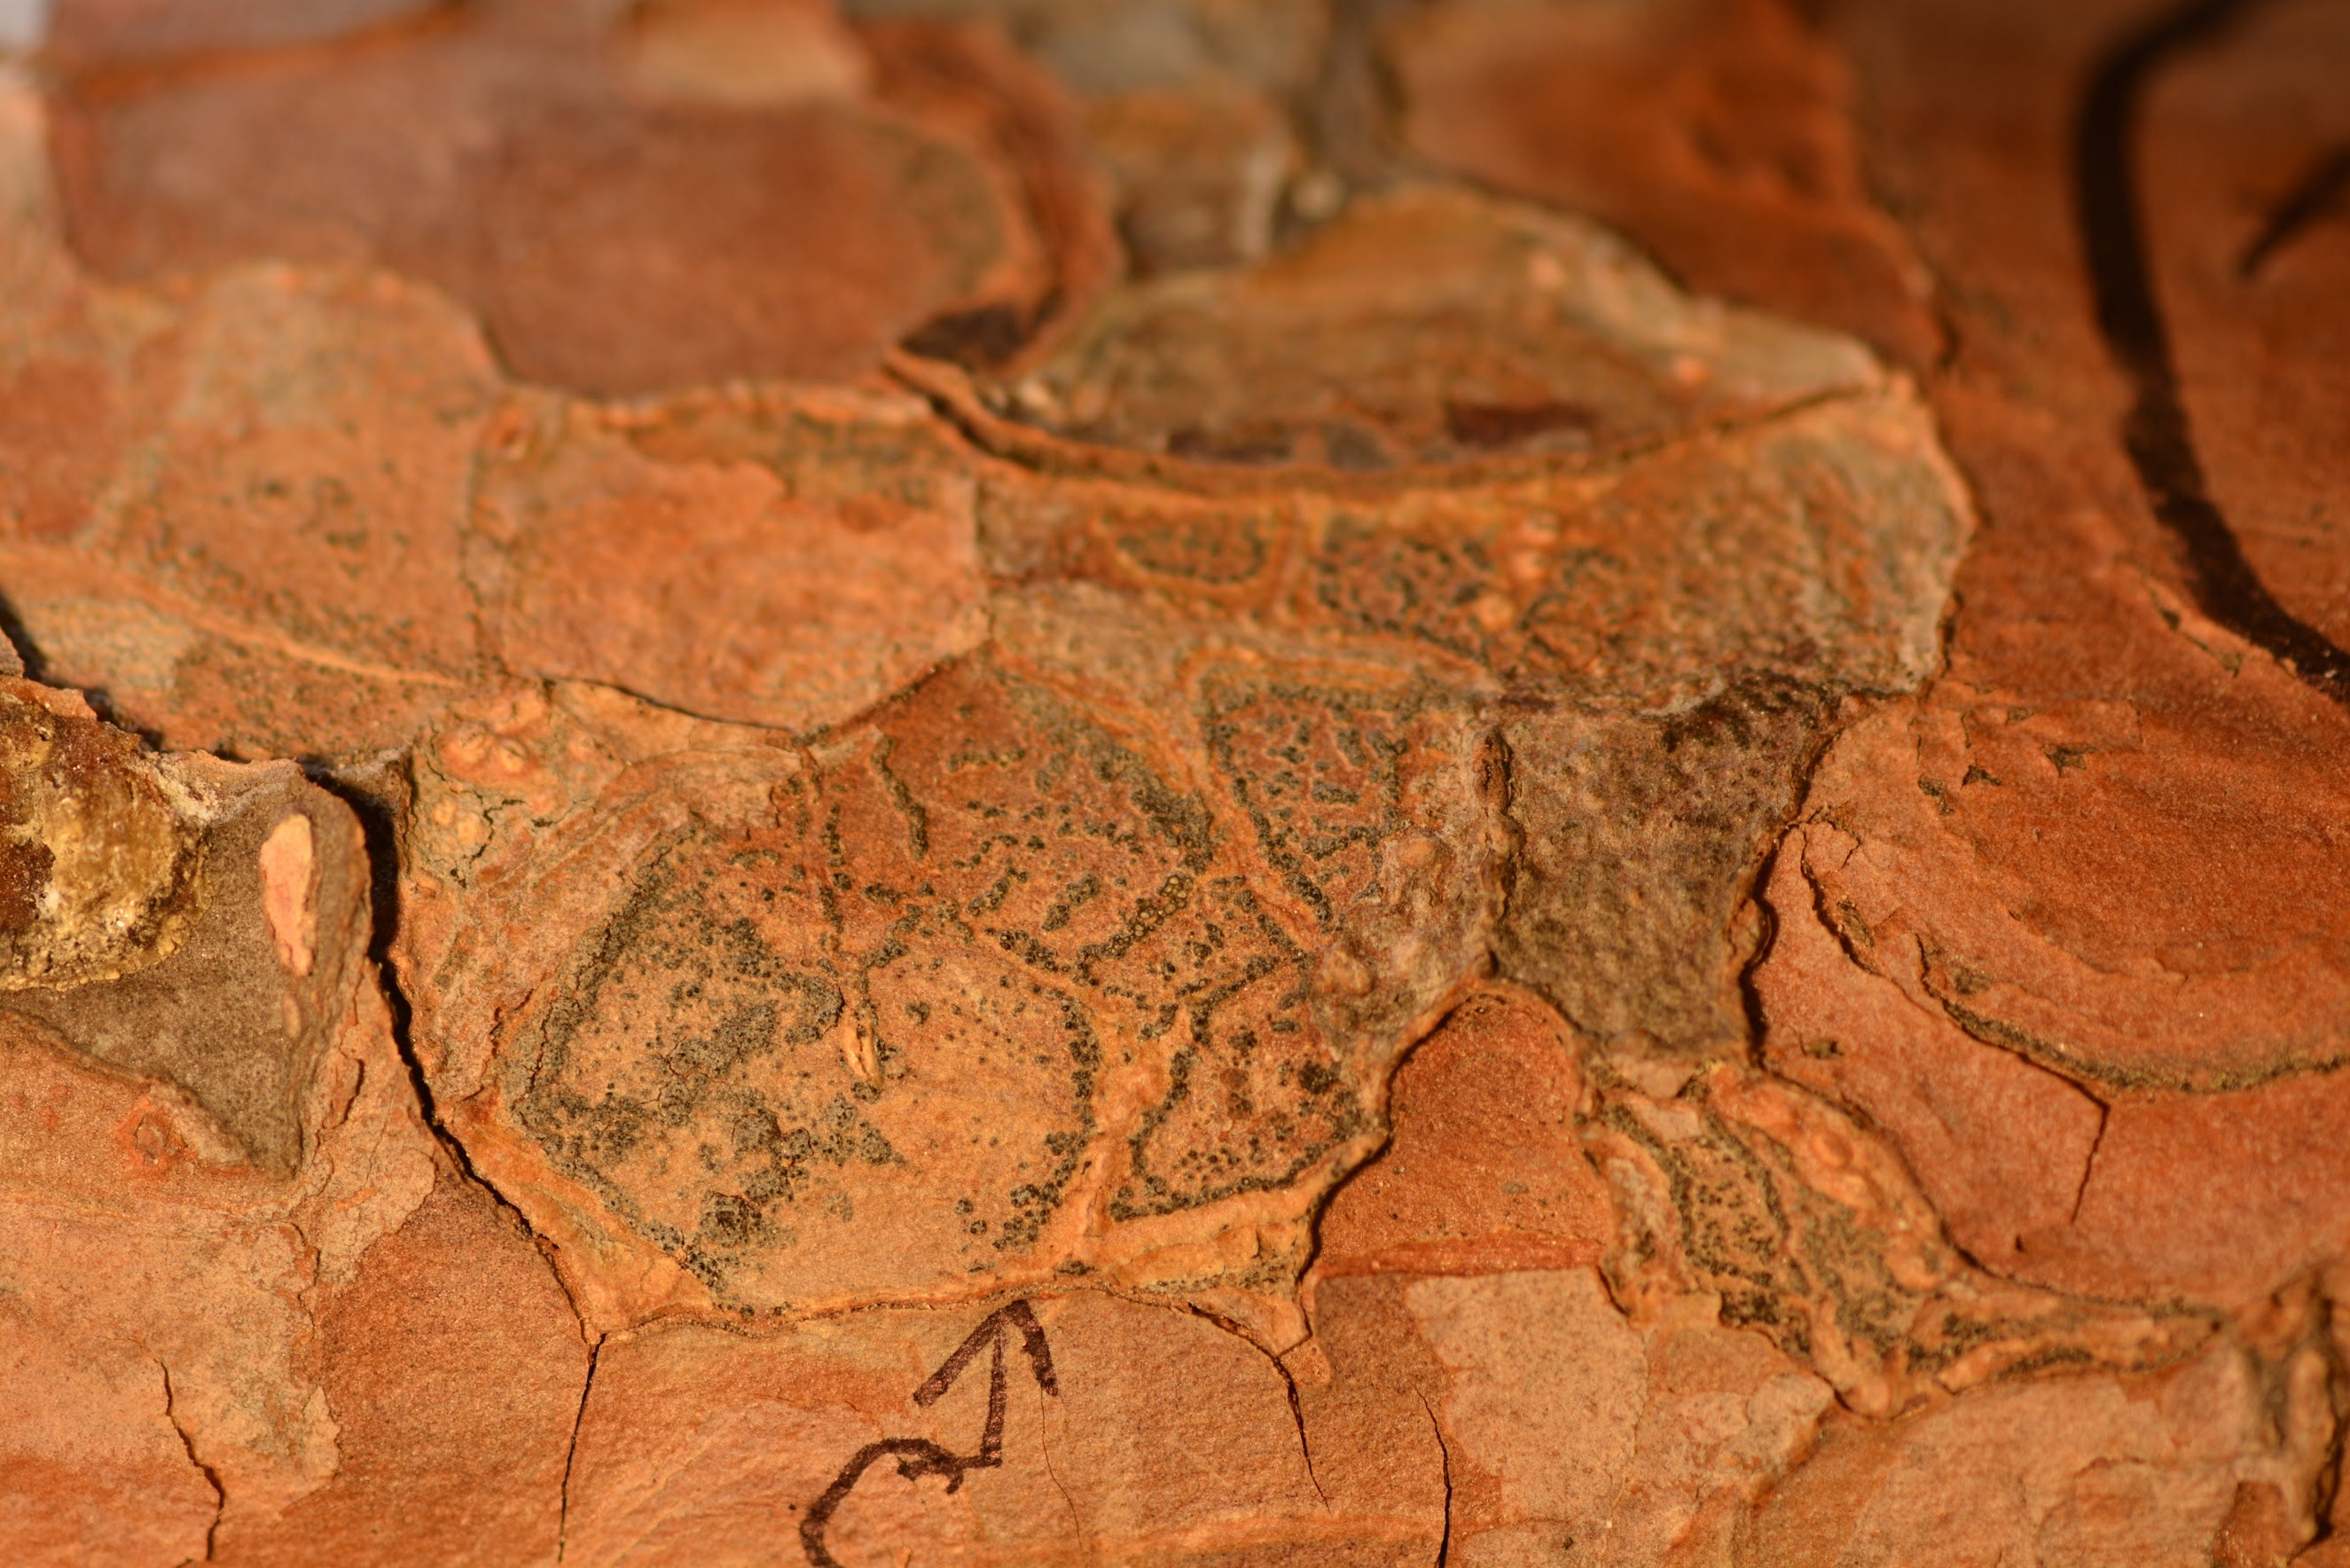  Closeup of bark showing spores of a fungal pathogen